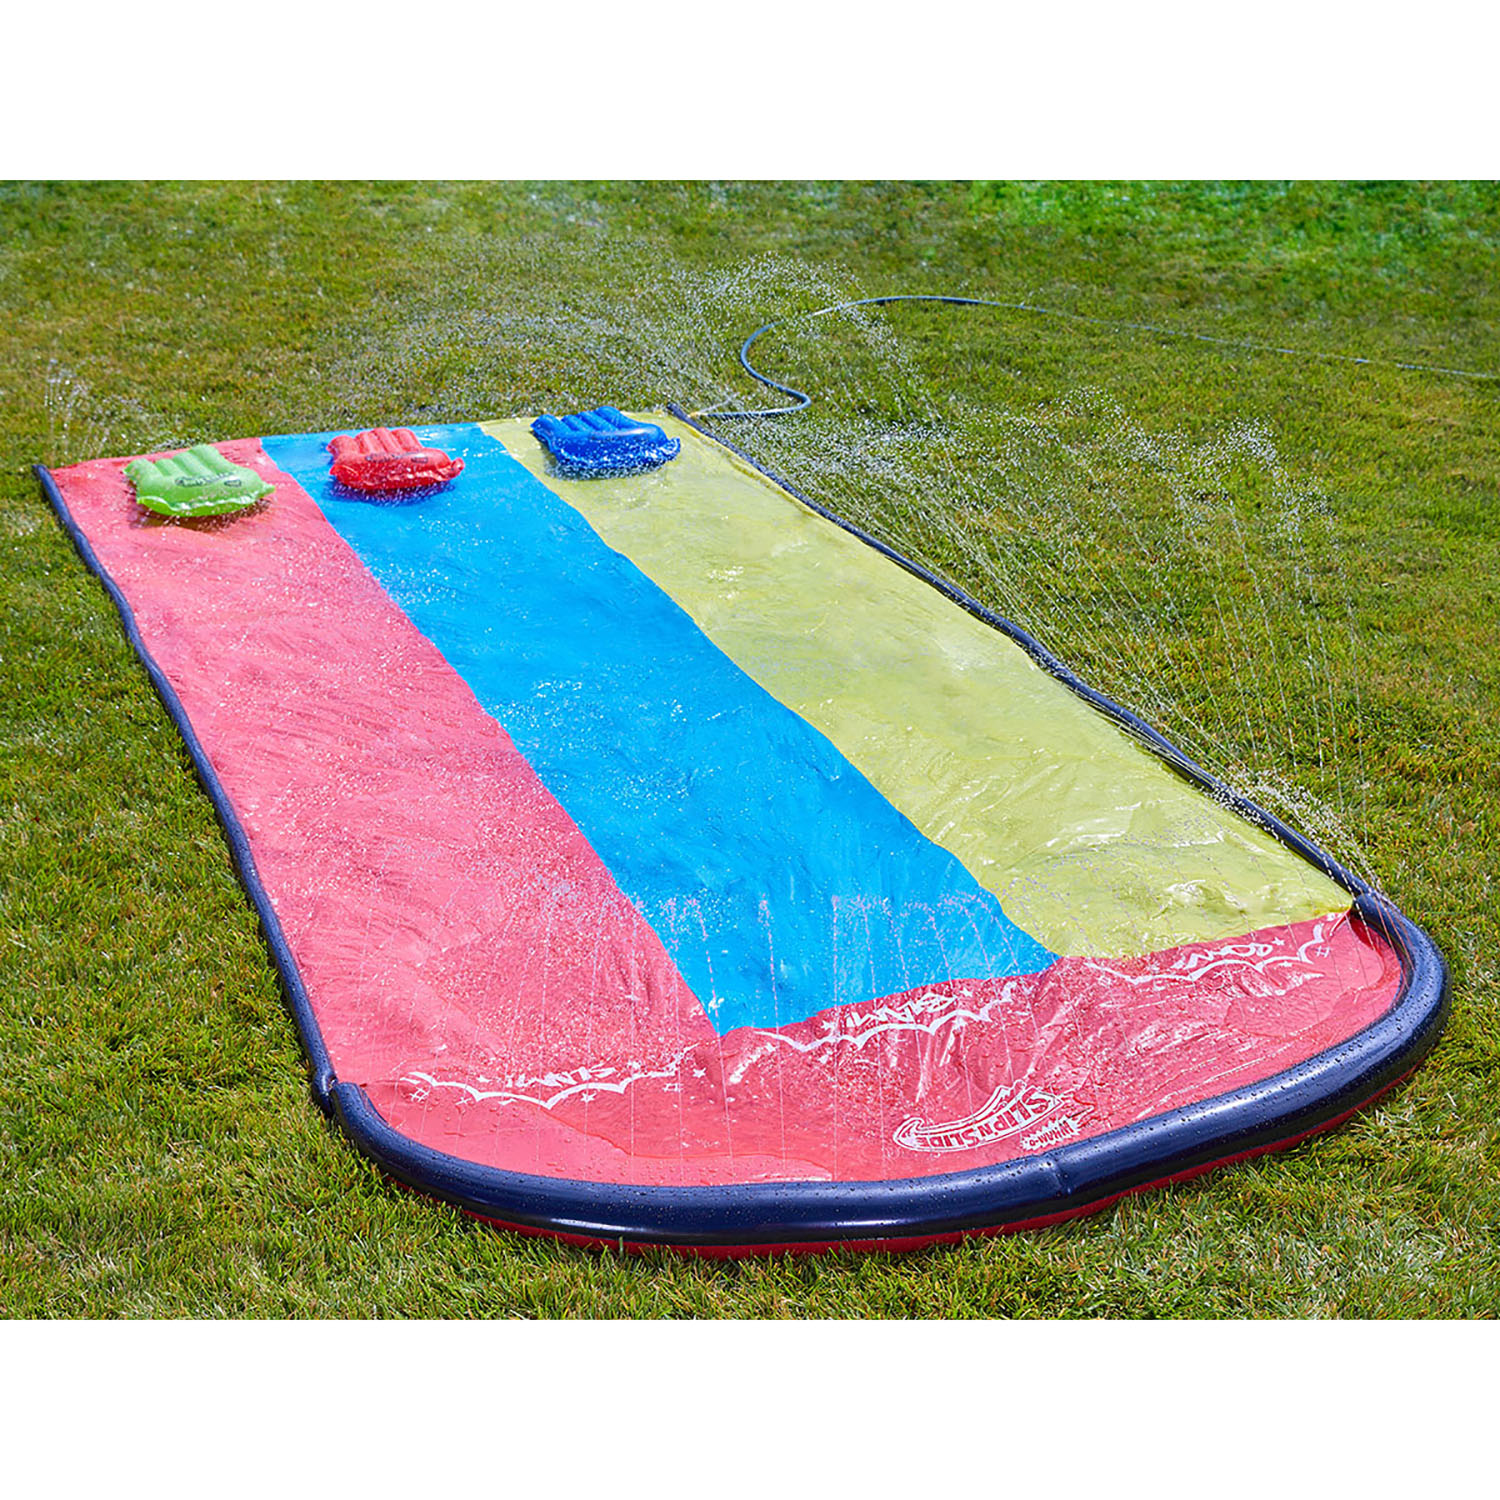 Wham-O Hydroplane 16 Foot Lawn Kid's Triple Lane Water Slide with Splash Zone - image 5 of 5